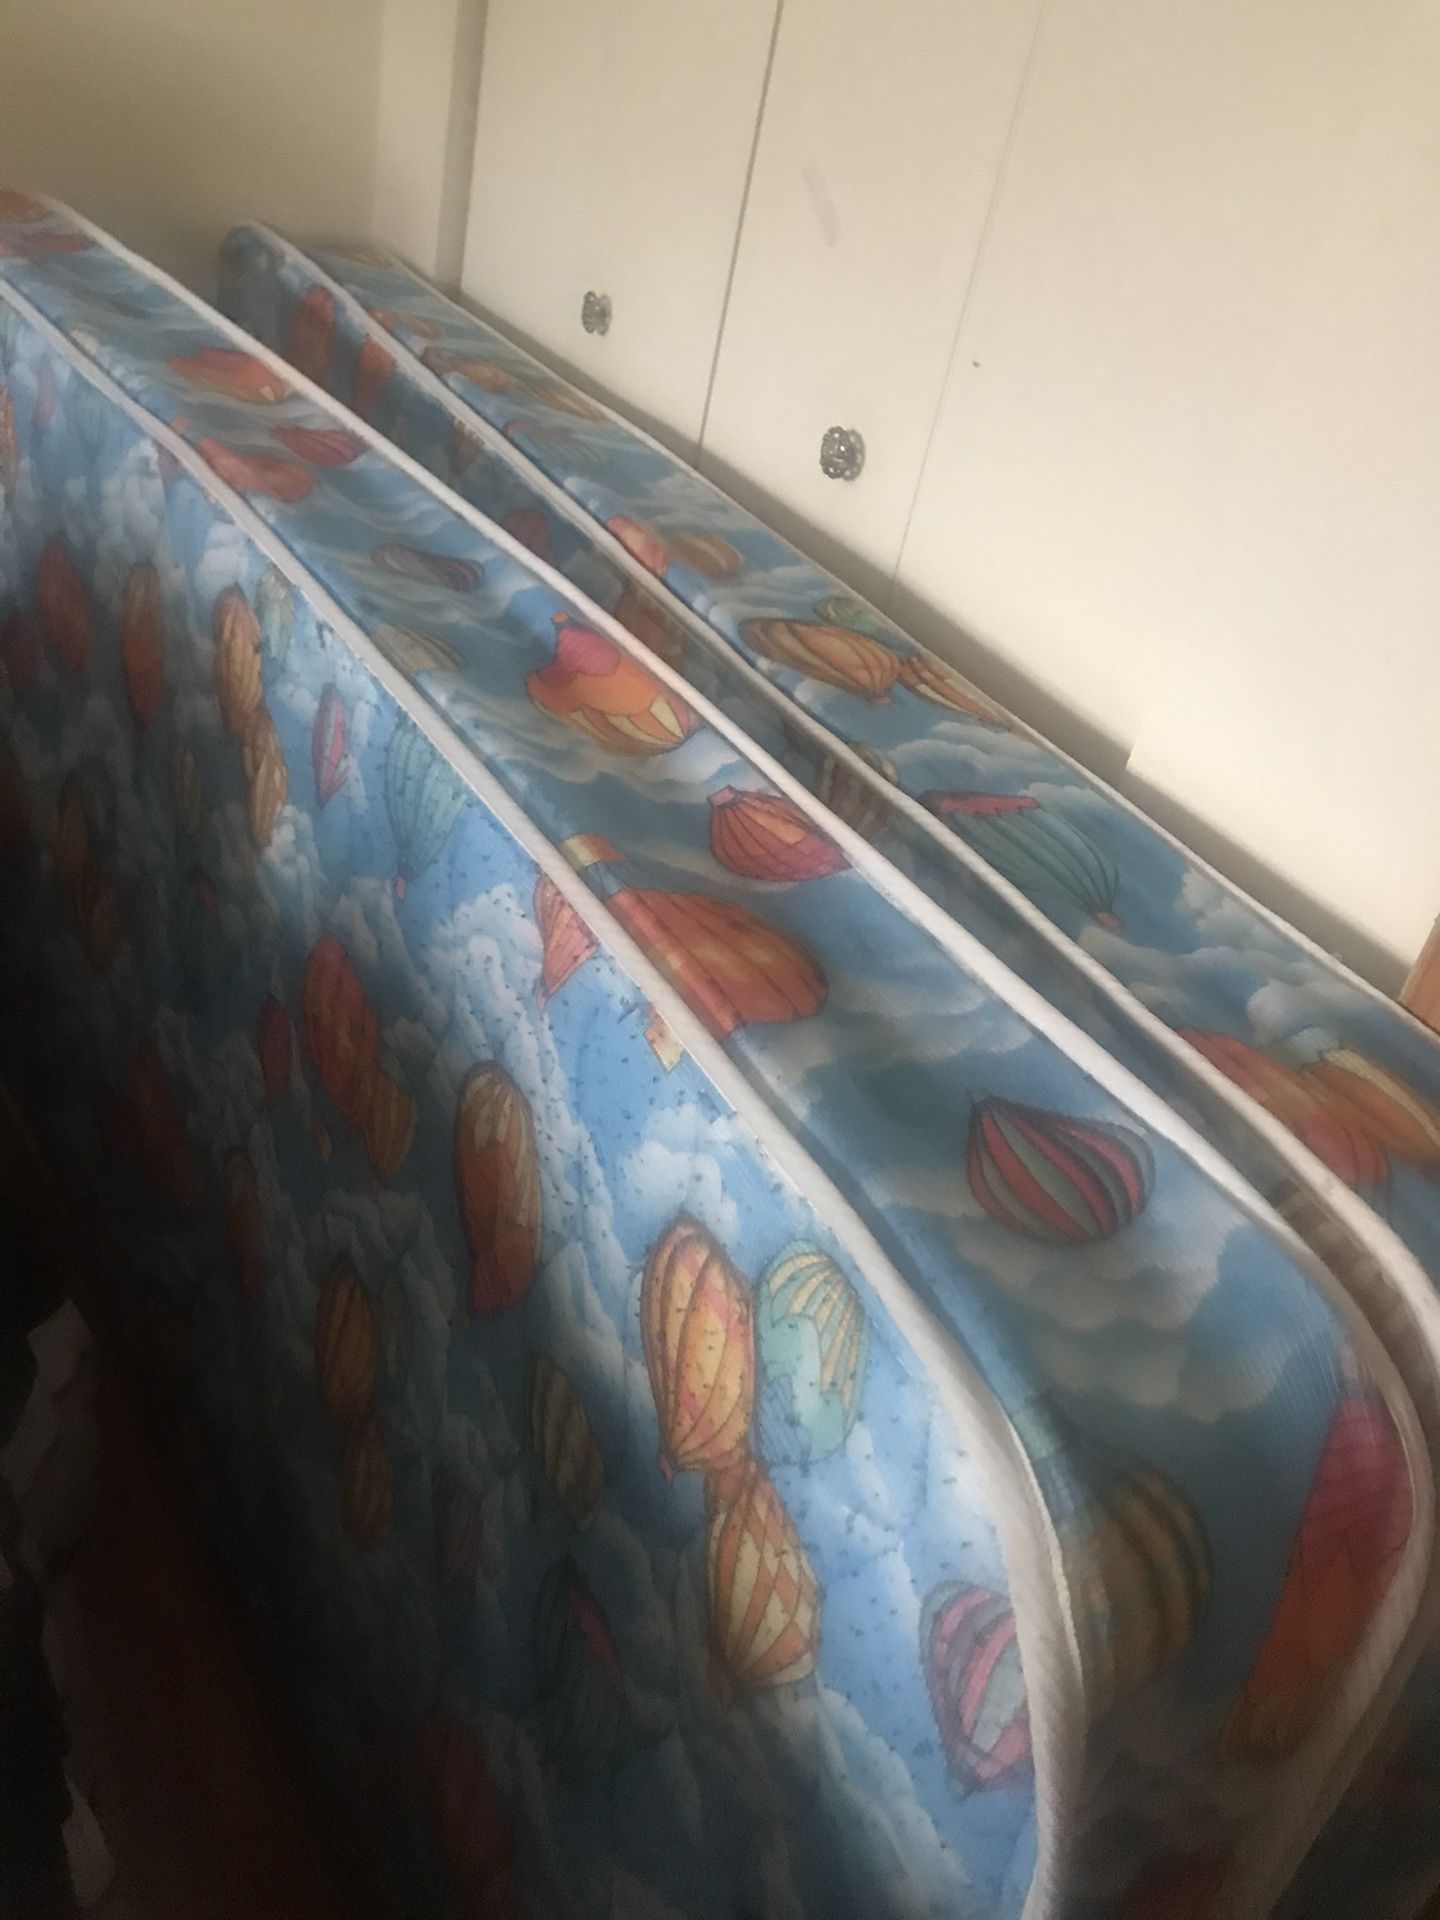 Free 2 twin size bunk bed mattress